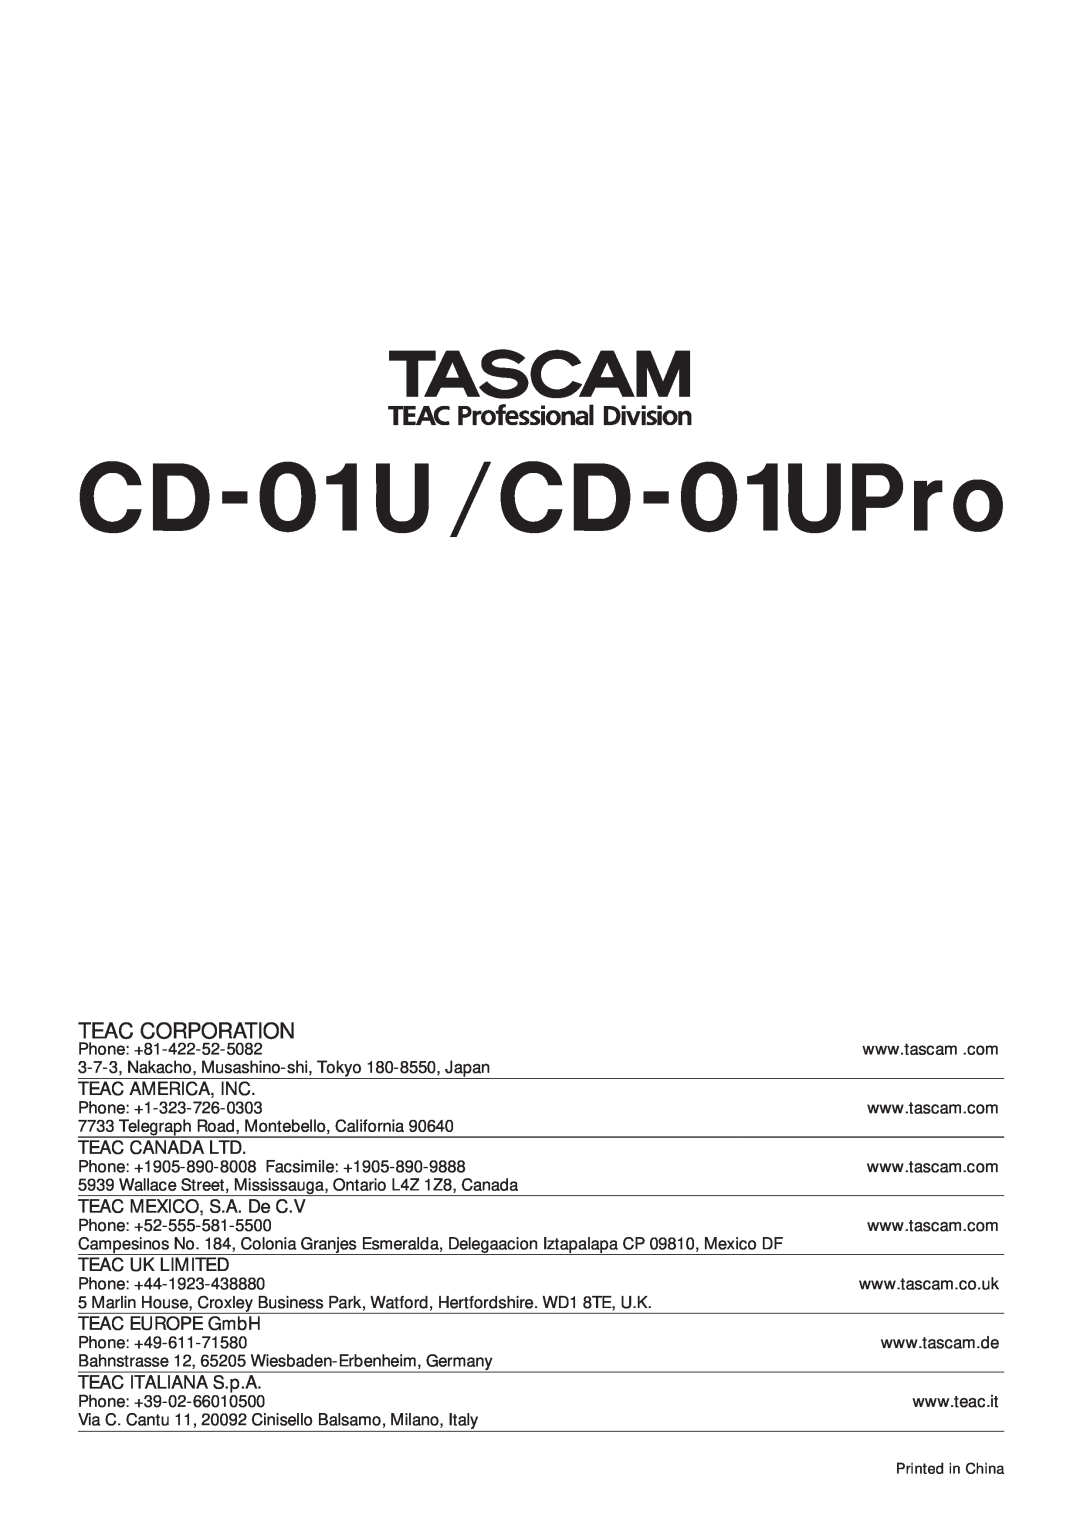 Tascam owner manual CD-01 U /CD-01UPro, Teac Corporation 